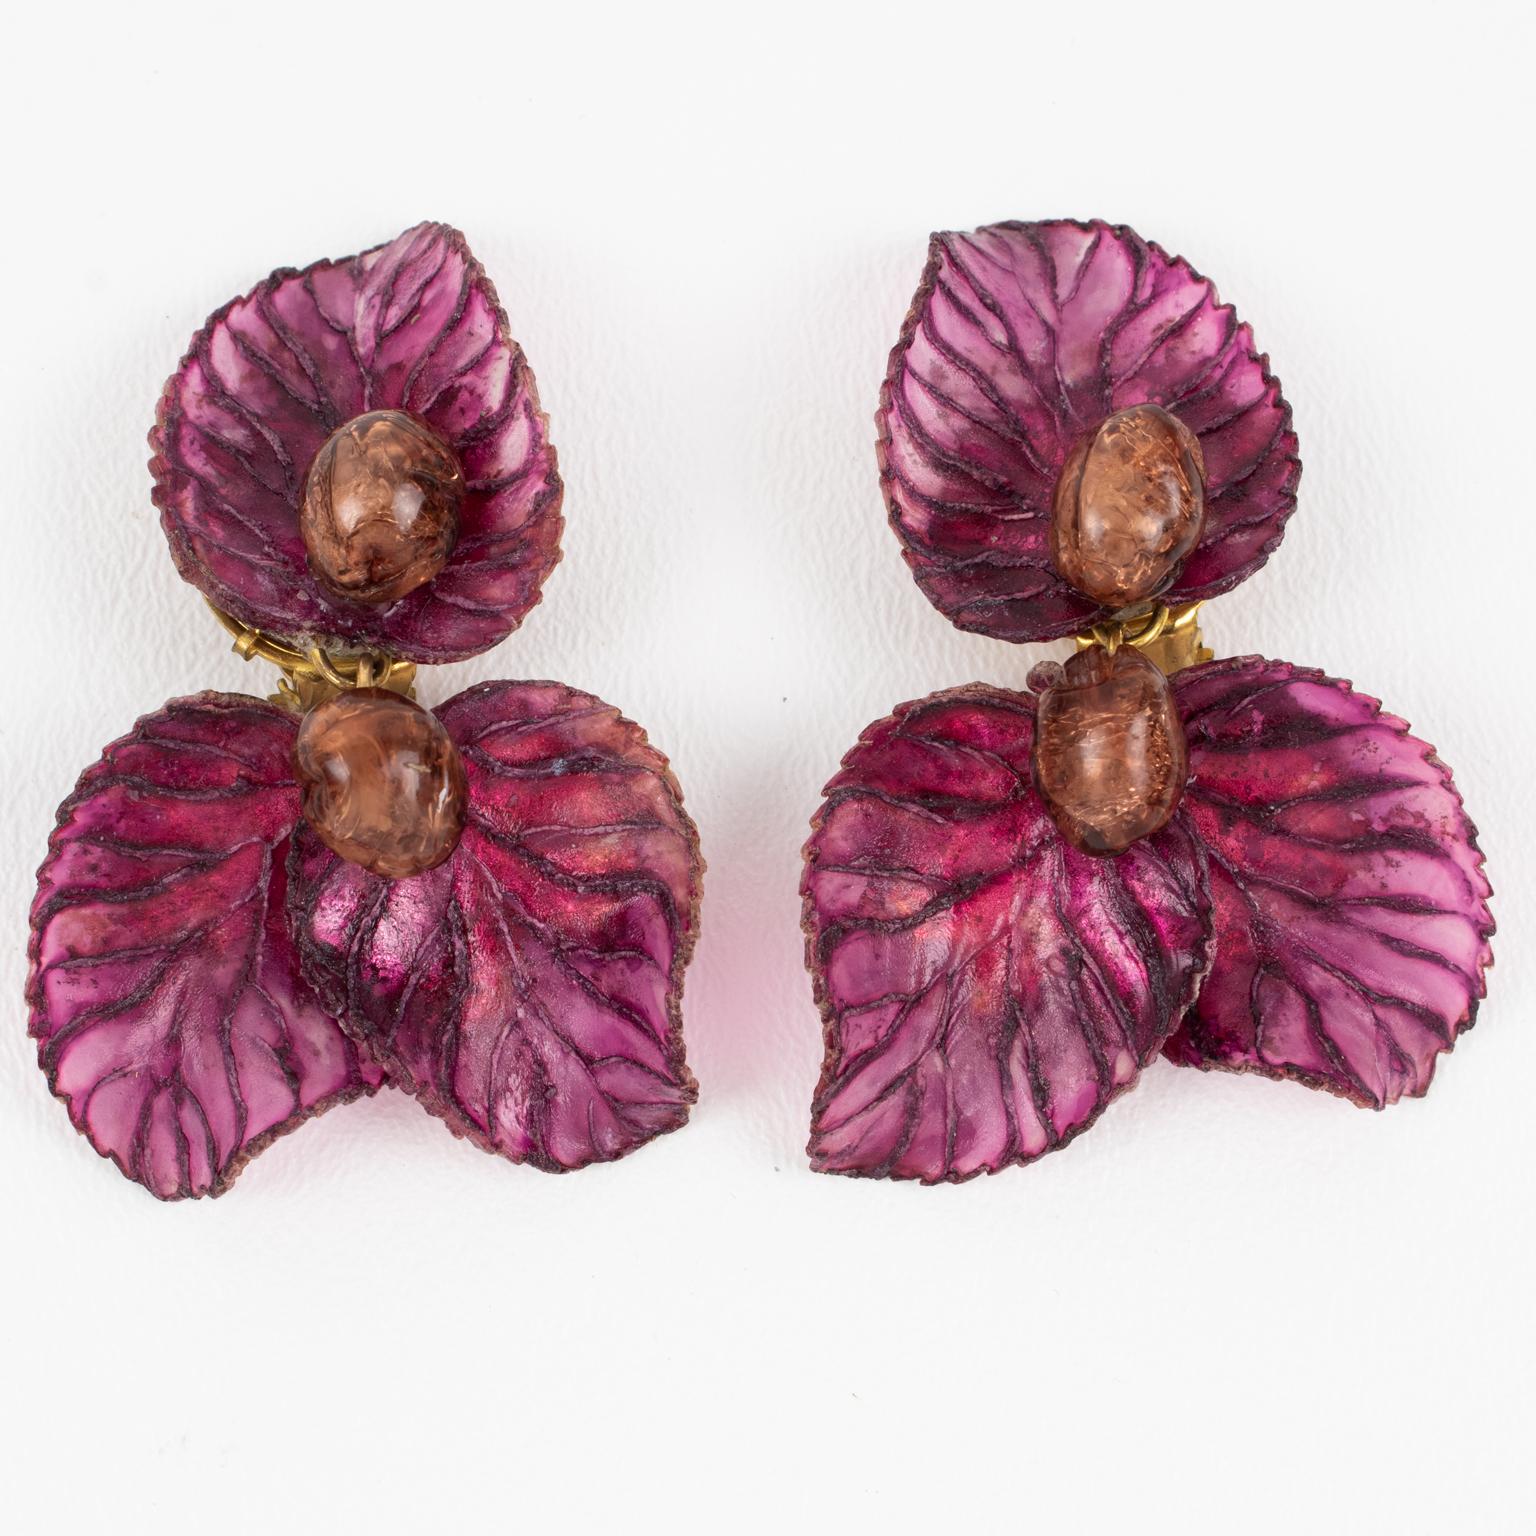 Francoise Montague by Cilea Clip-Ohrringe aus Harz mit lila undffe Früchtenblättern (Romantik) im Angebot